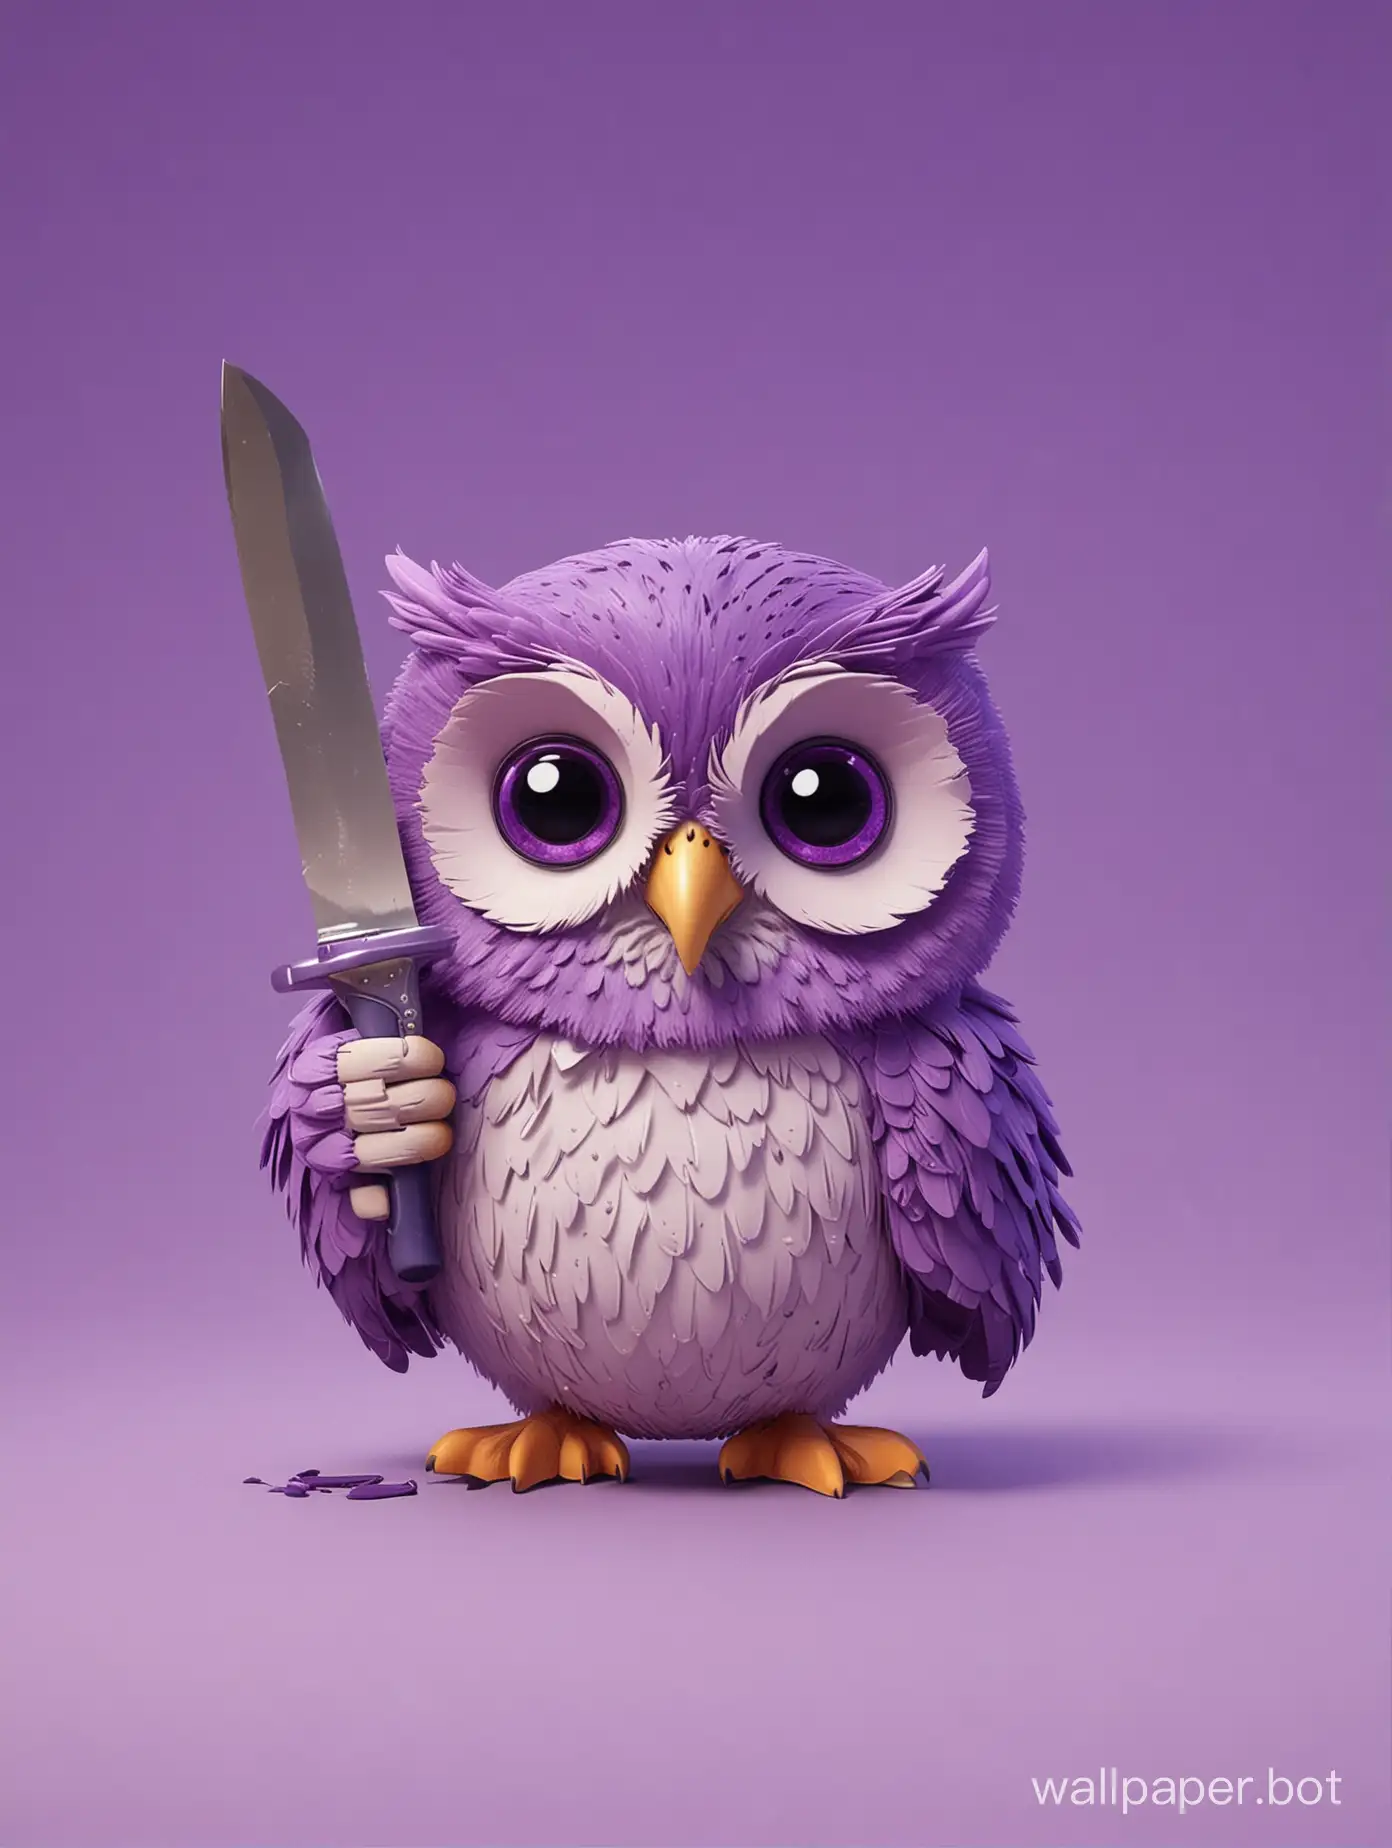 Cartoon-Owl-Cutting-Video-Pipeline-on-Purple-Gradient-Background